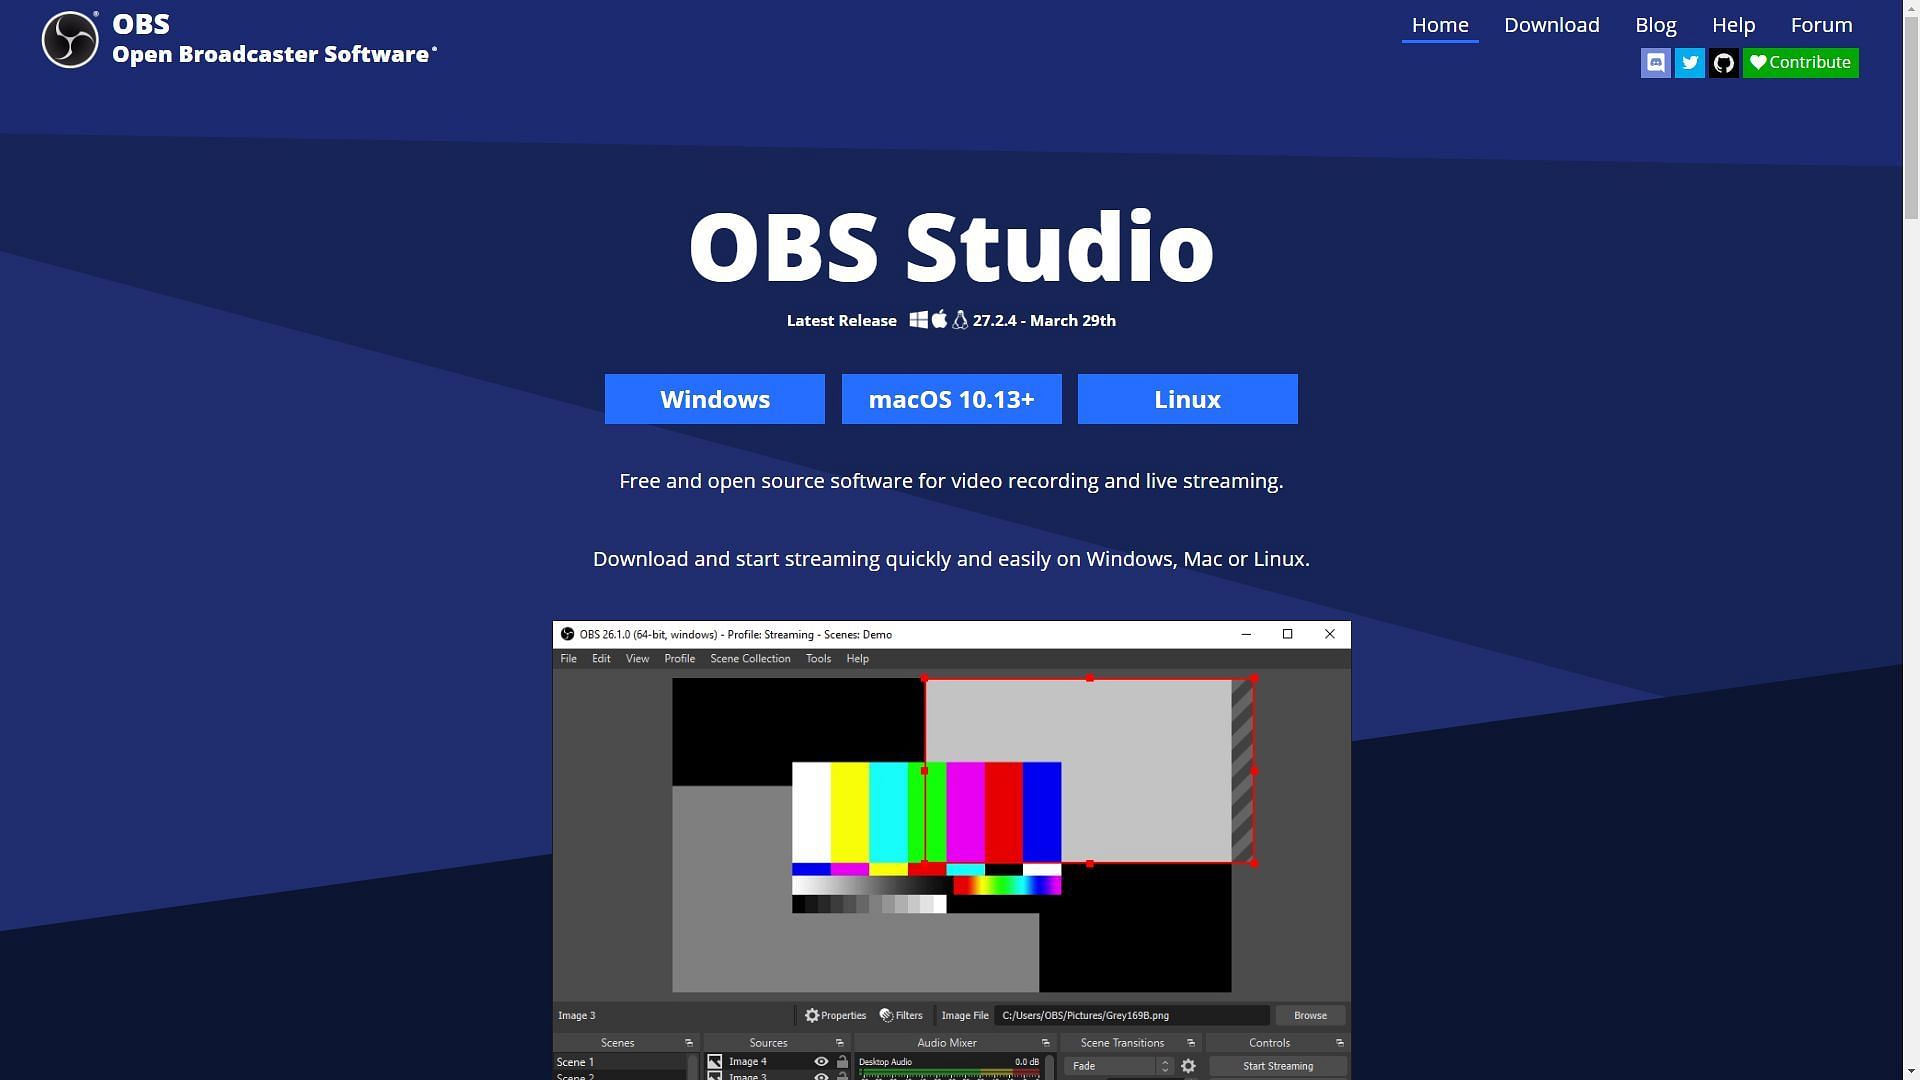 OBS official website (Image by Sportskeeda)